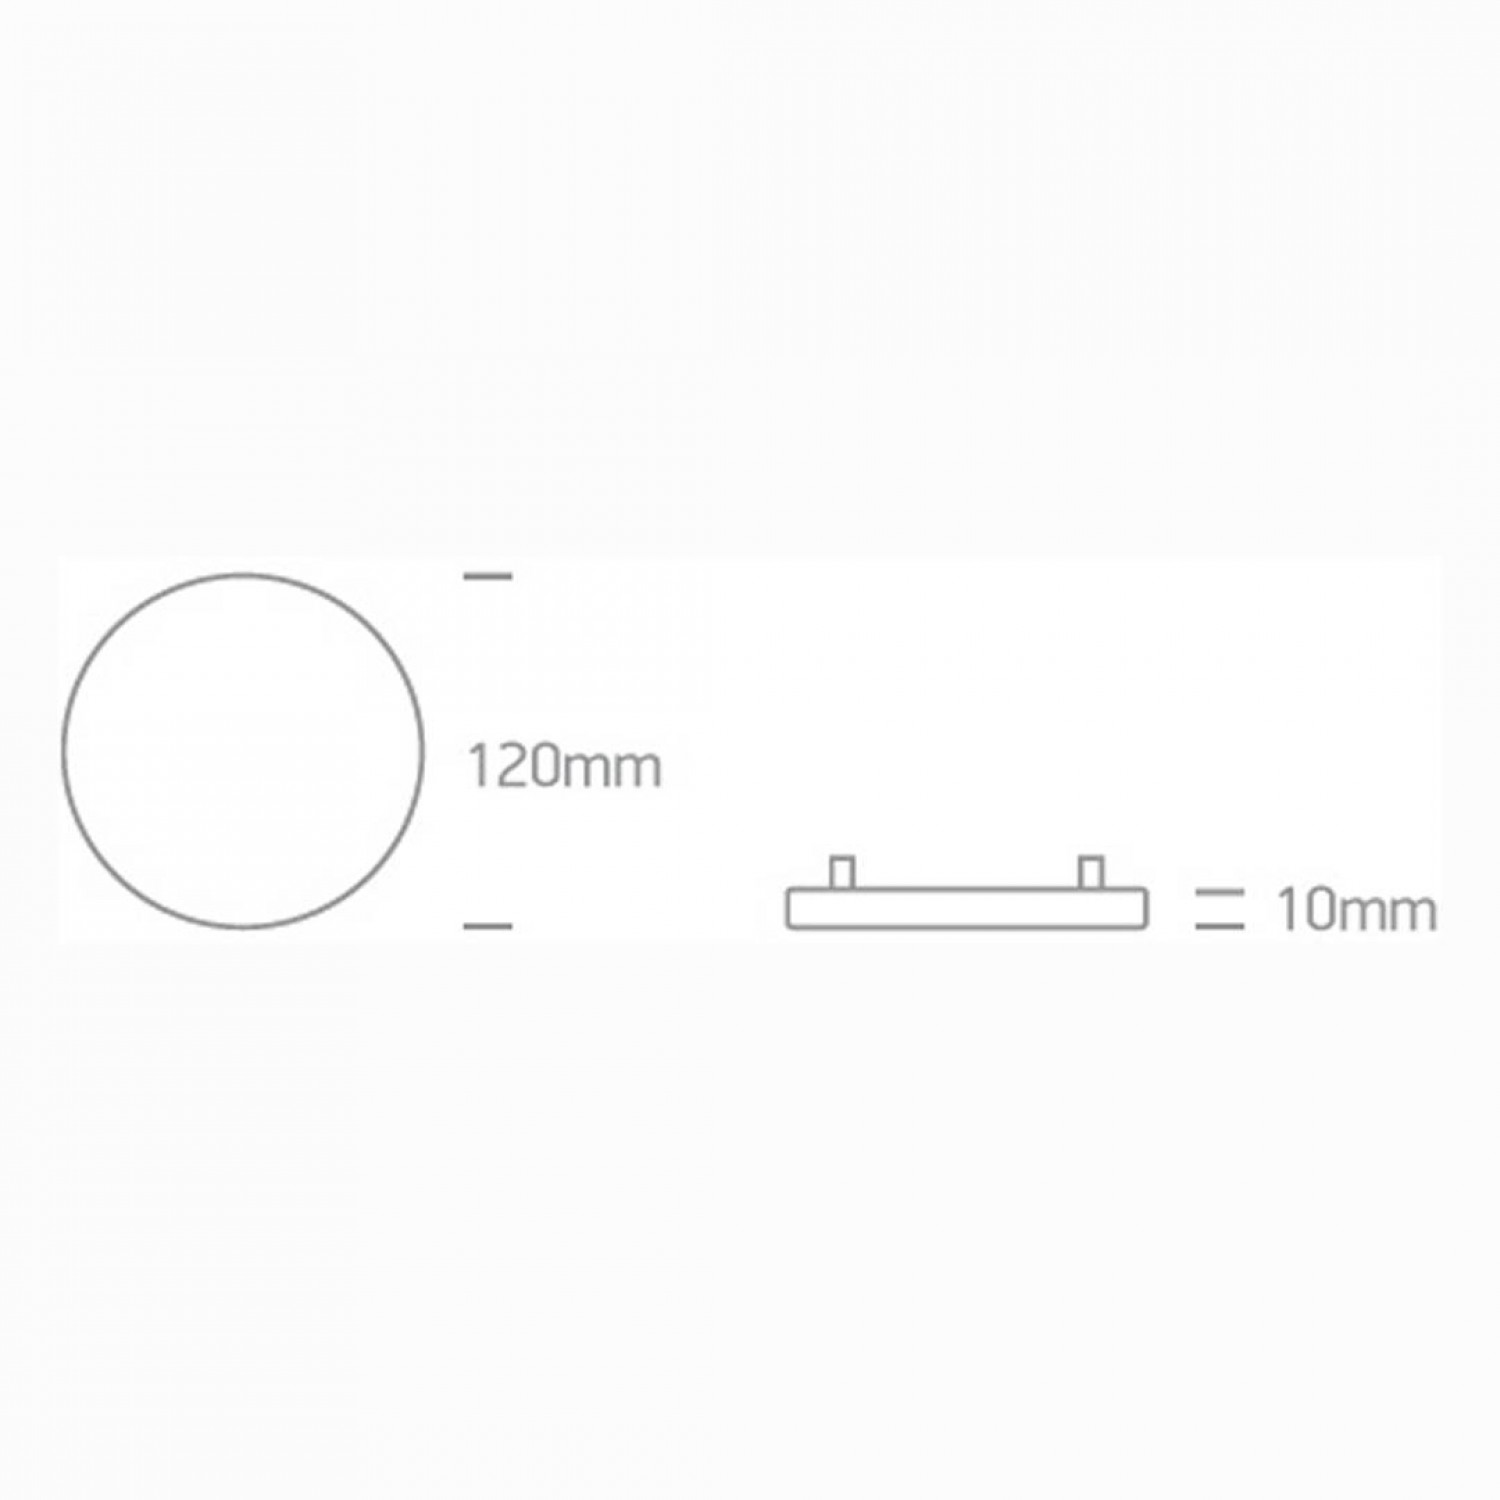 Точечный светильник ONE Light Floating Panels Range Adjustable Cut Out Hole 10110CE/W